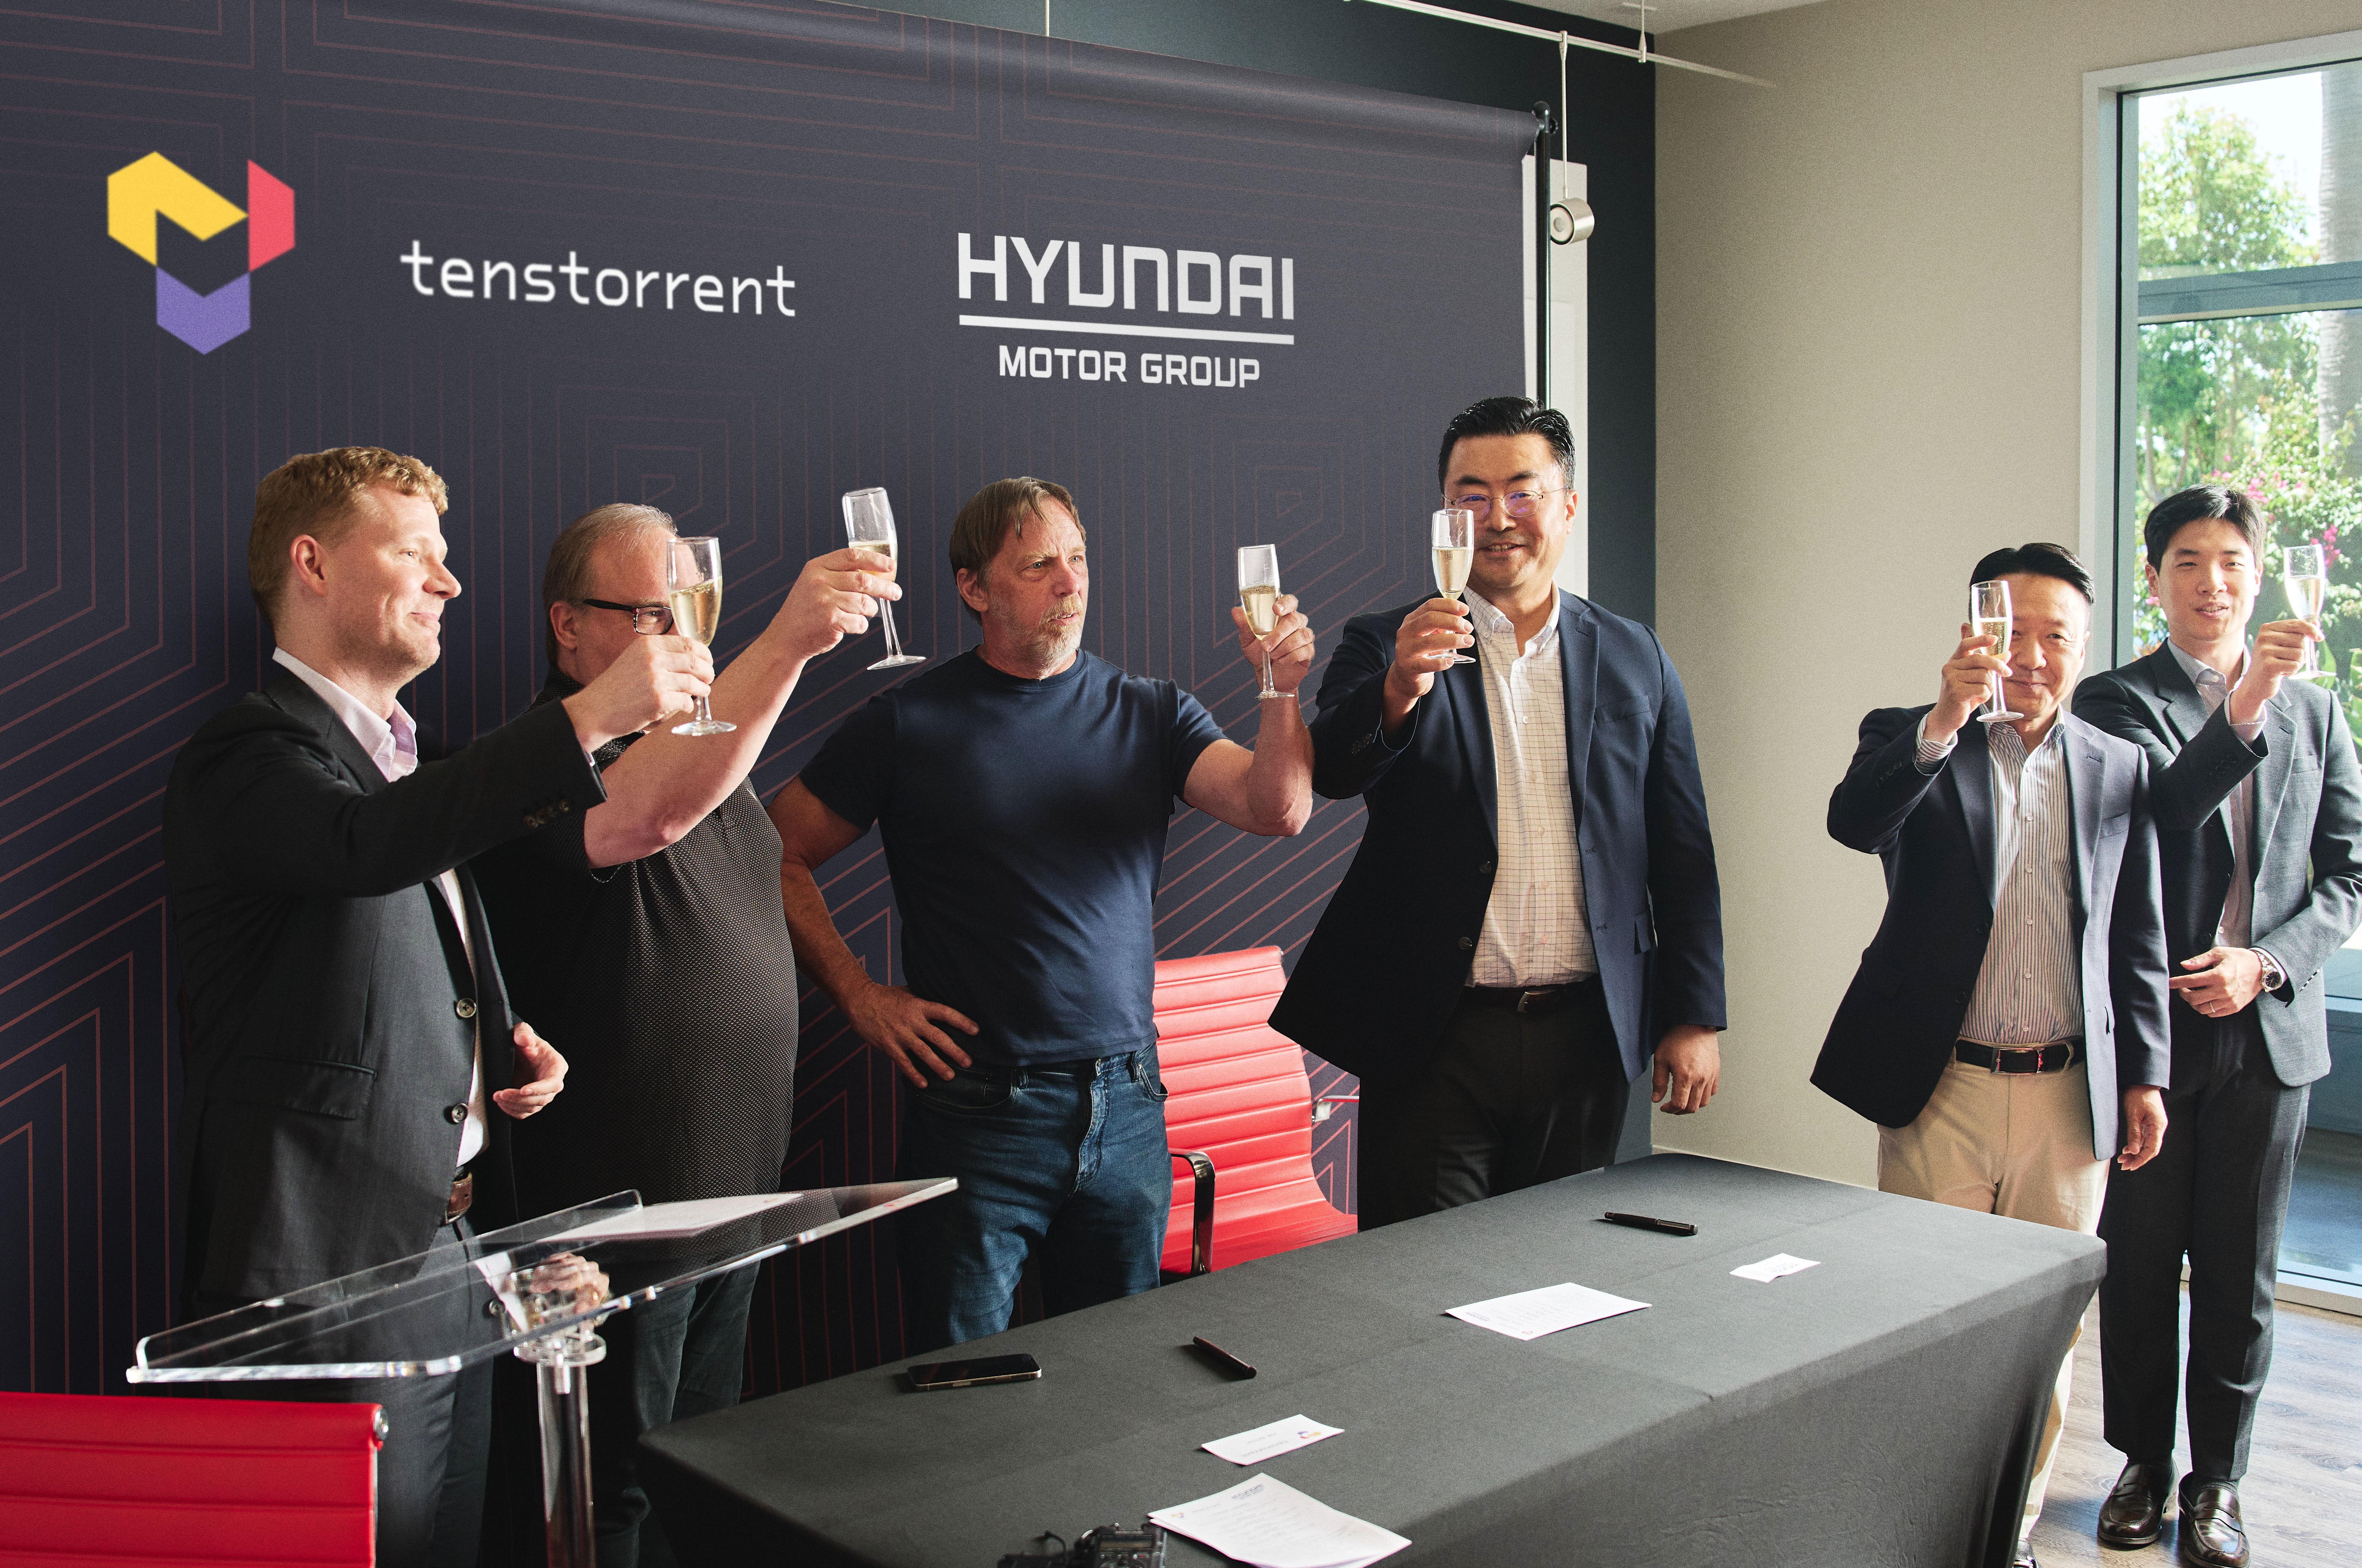 Hyundai Motor Group-Tenstorrent partnership